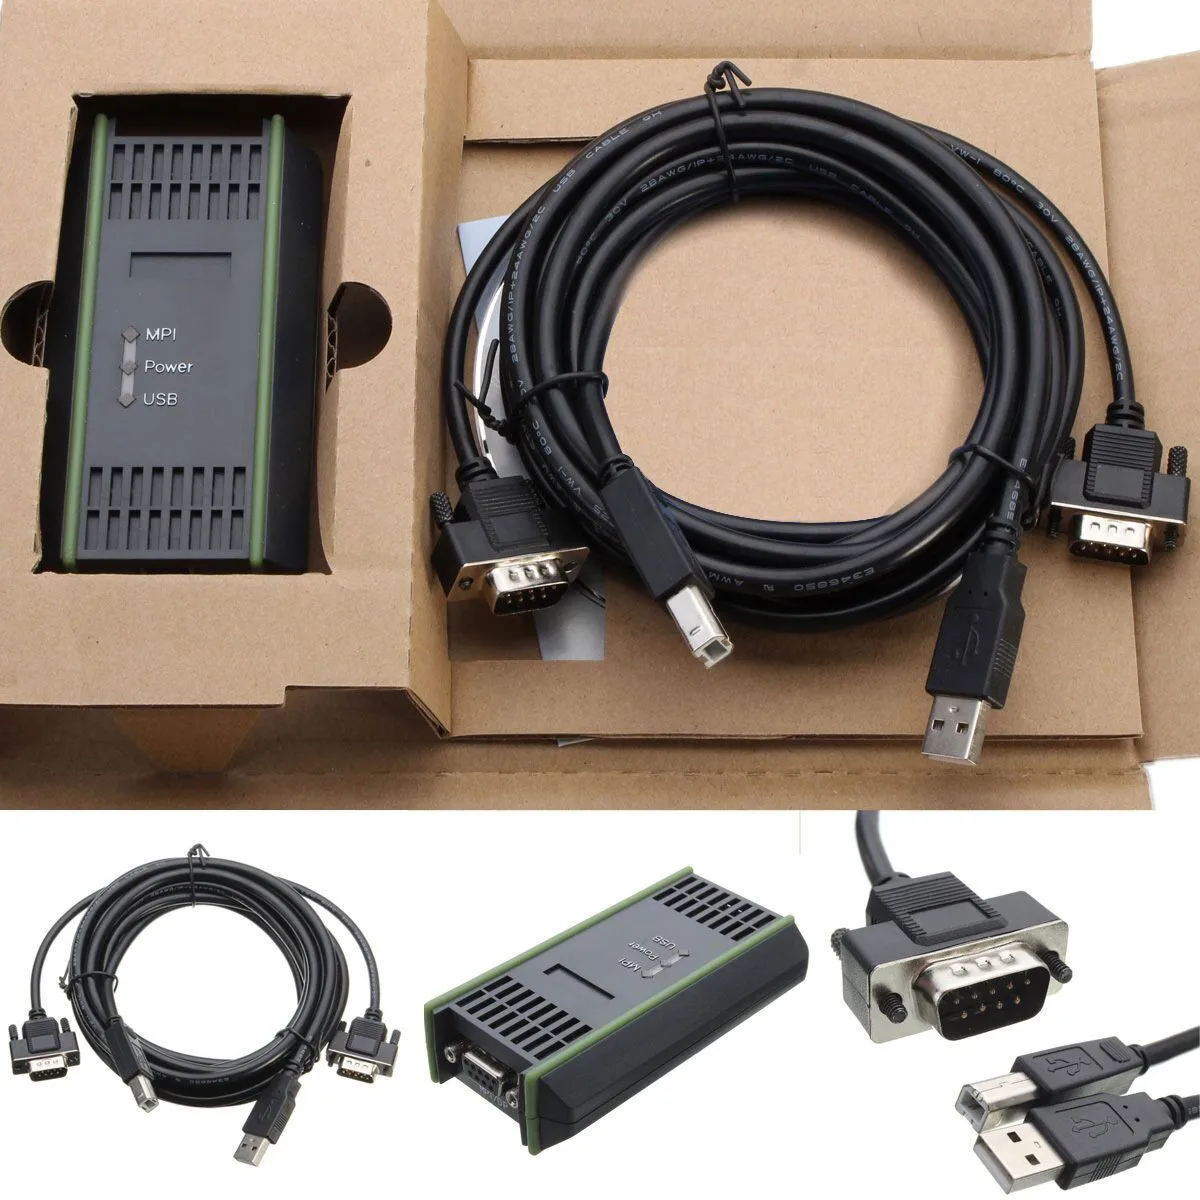 USB-адаптер для ПК 9-контактный адаптер Siemens/300/400 RS485 Profibus/MPI/PPI замена Siemens 6ES7972-0CB20-0XA0 |